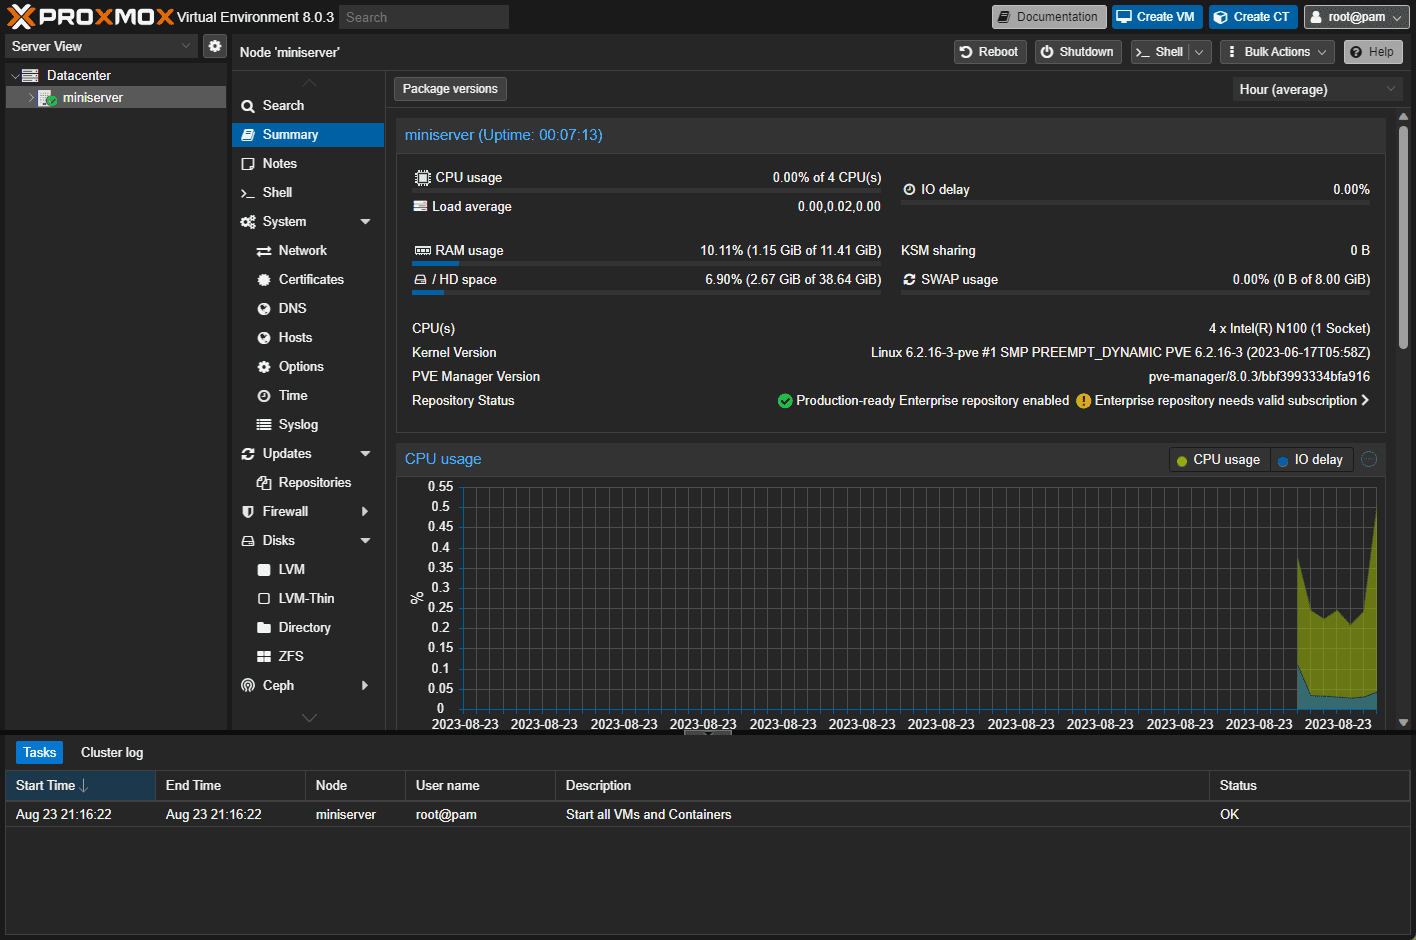 Running Proxmox on the Mini Server